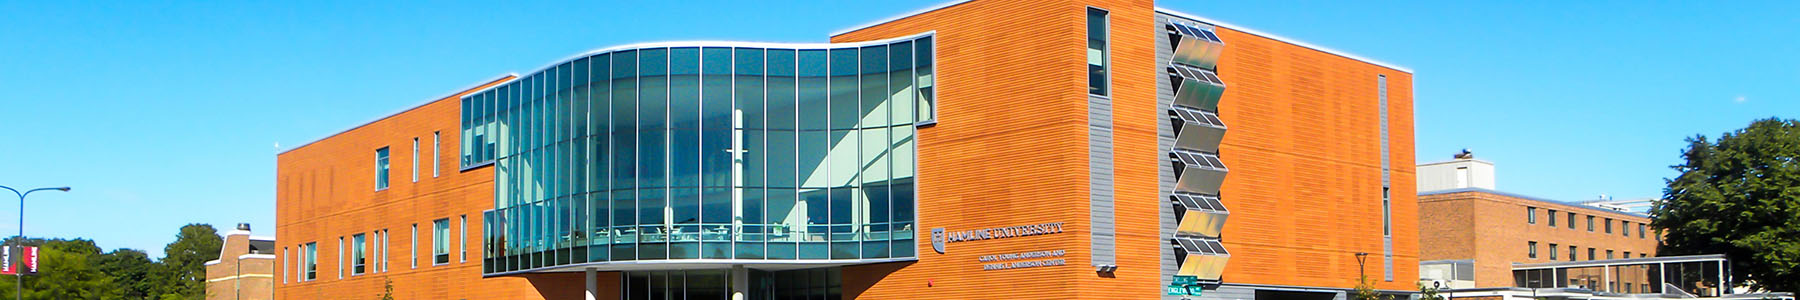 Hamline University Anderson Student Center | Dunham Projects | Dunham ...